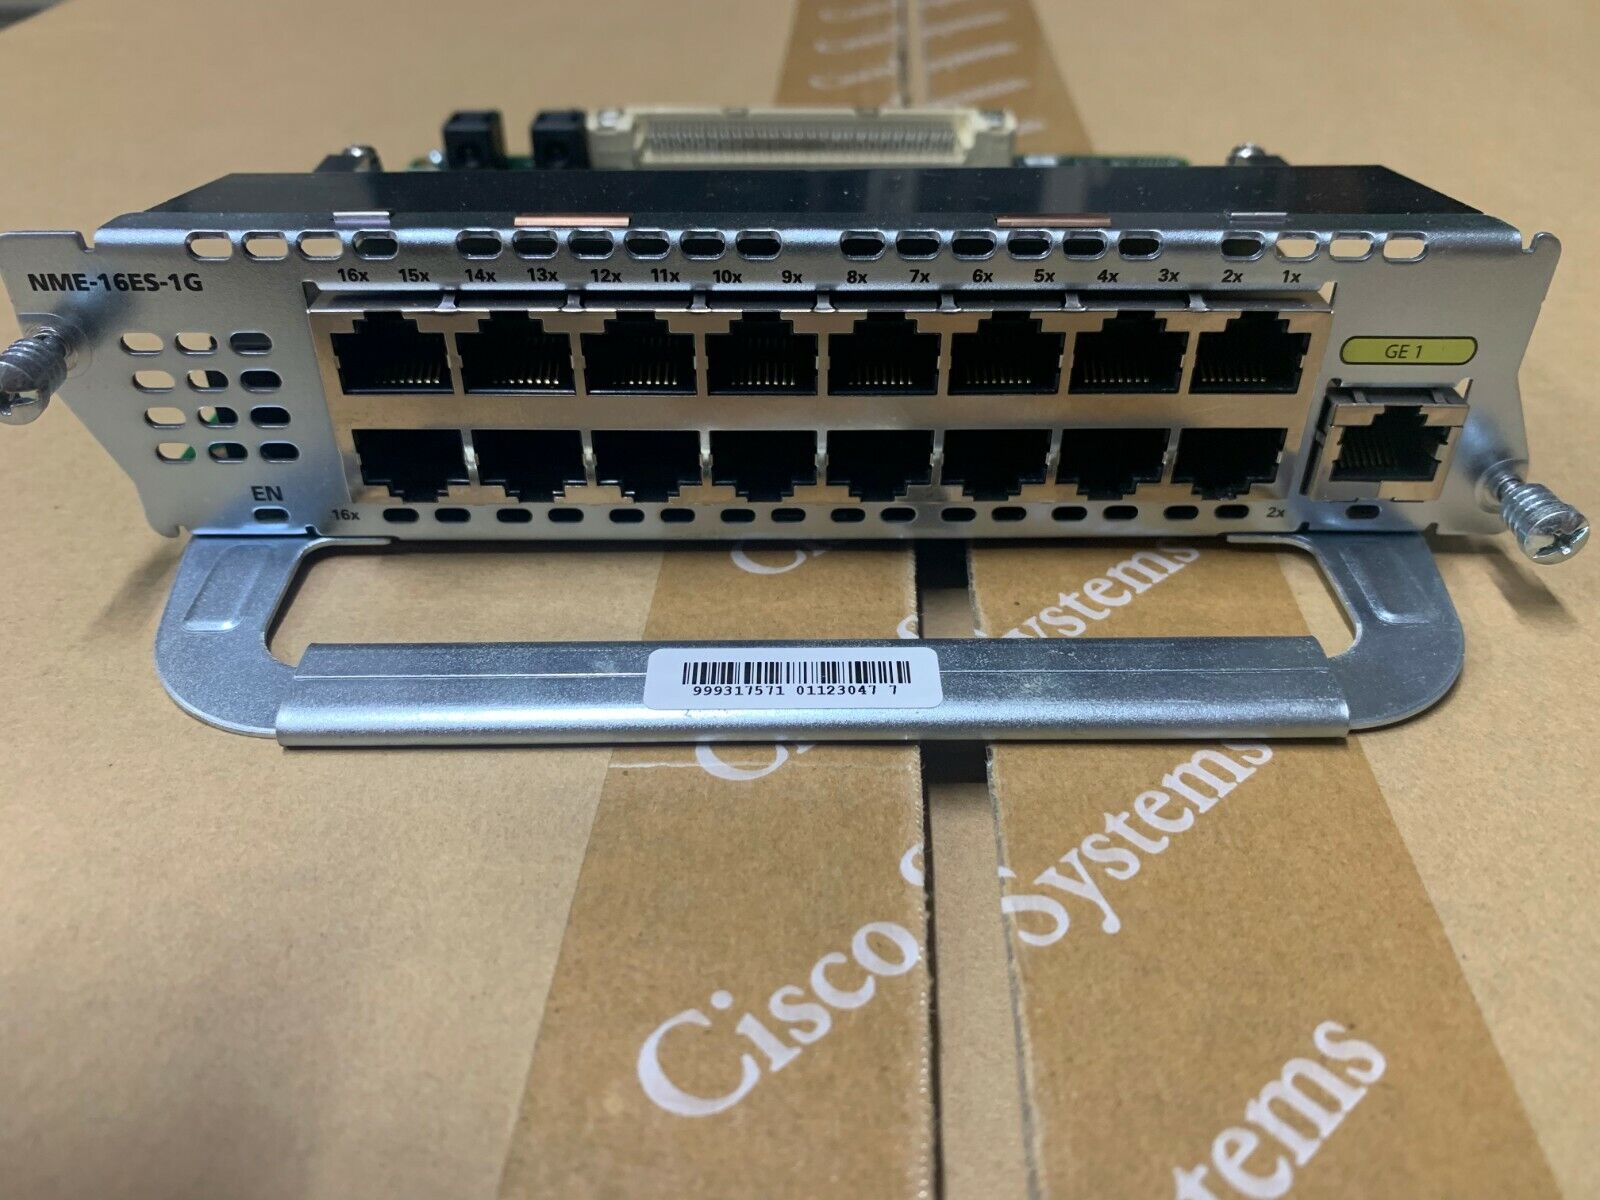 *Brand New* Cisco NME-16ES-1G 16-Port Gigabit EtherSwitch Service Module Card